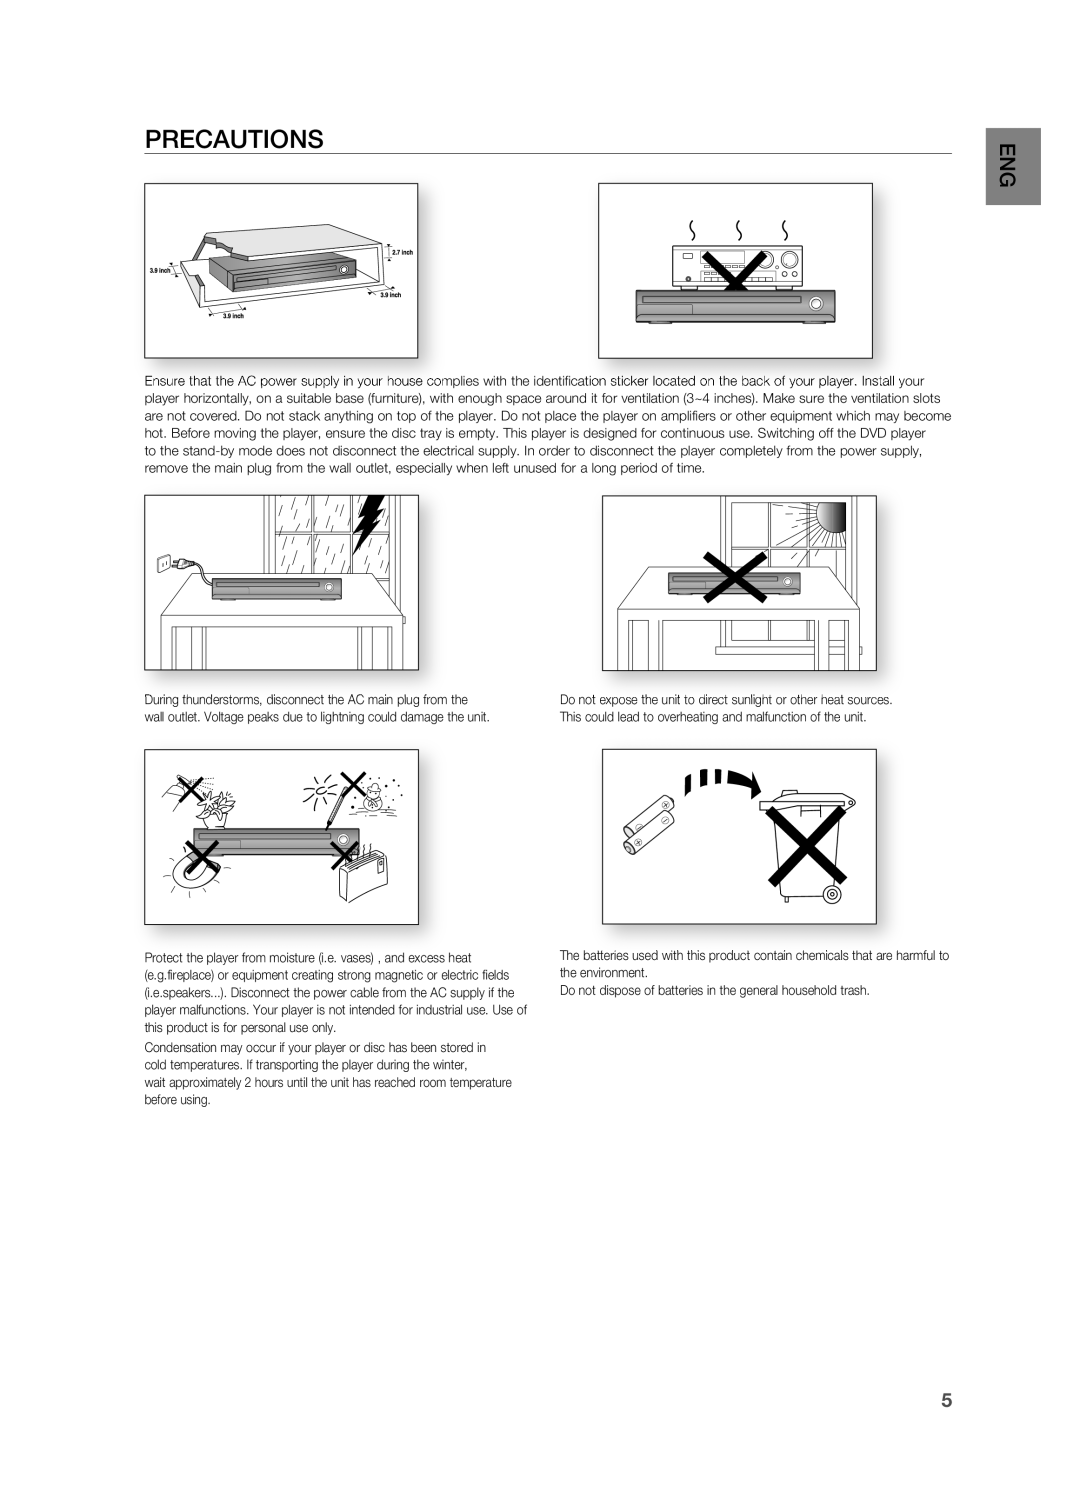 Samsung HT-TZ515 user manual PrECAUTIONS 